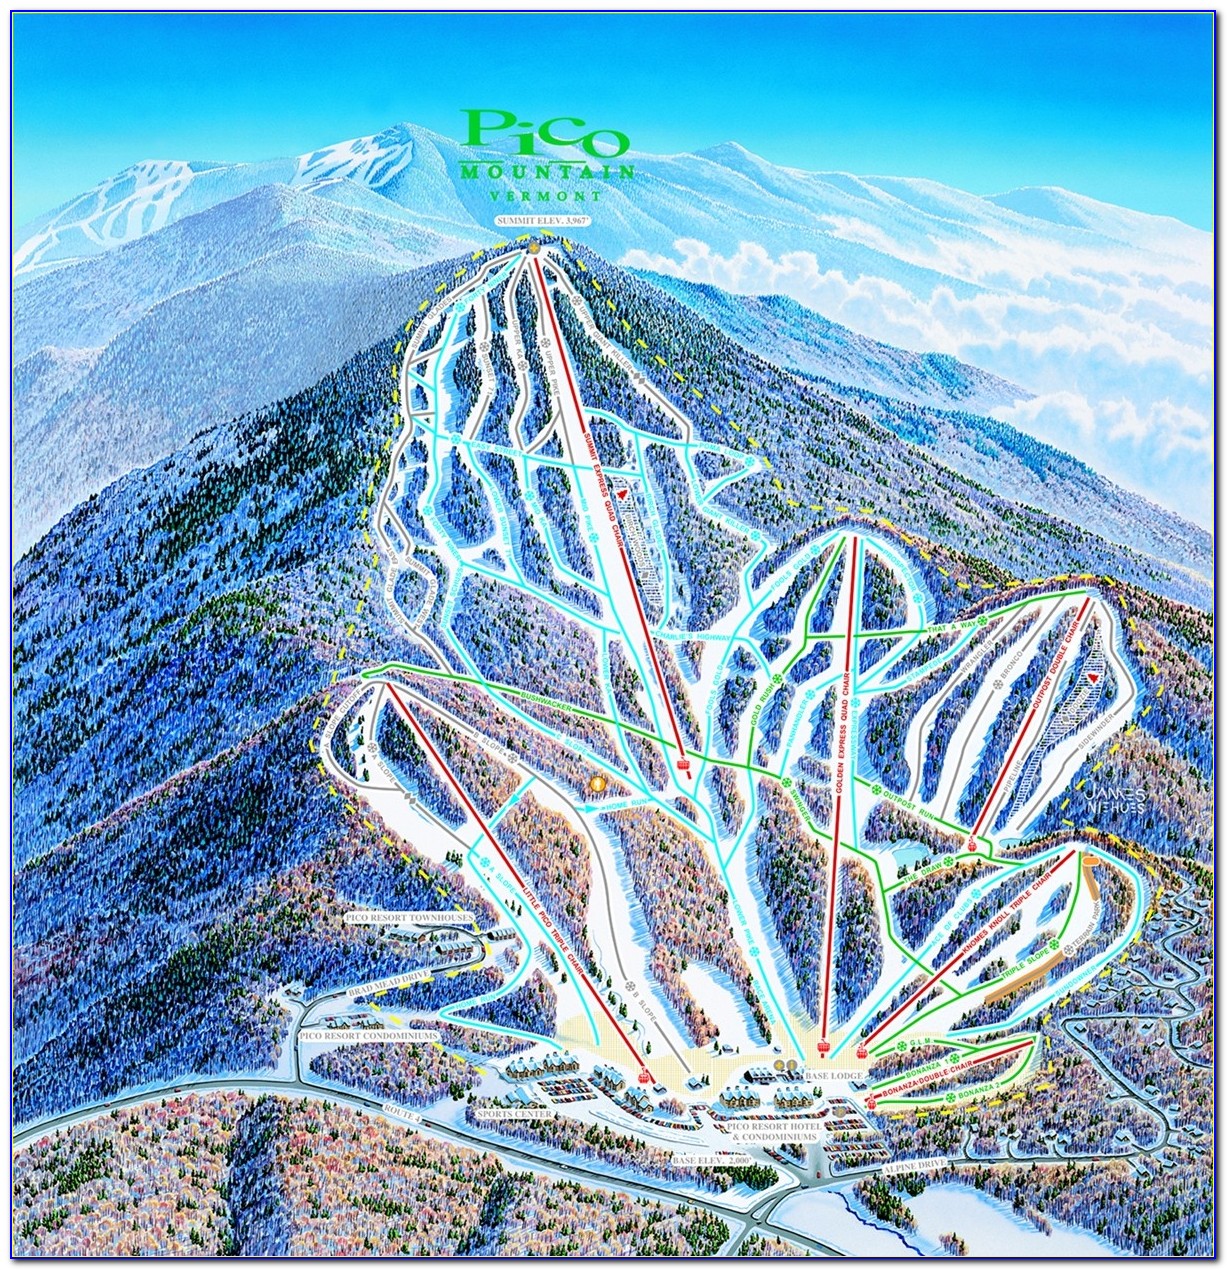 Pico Mountain Trail Map